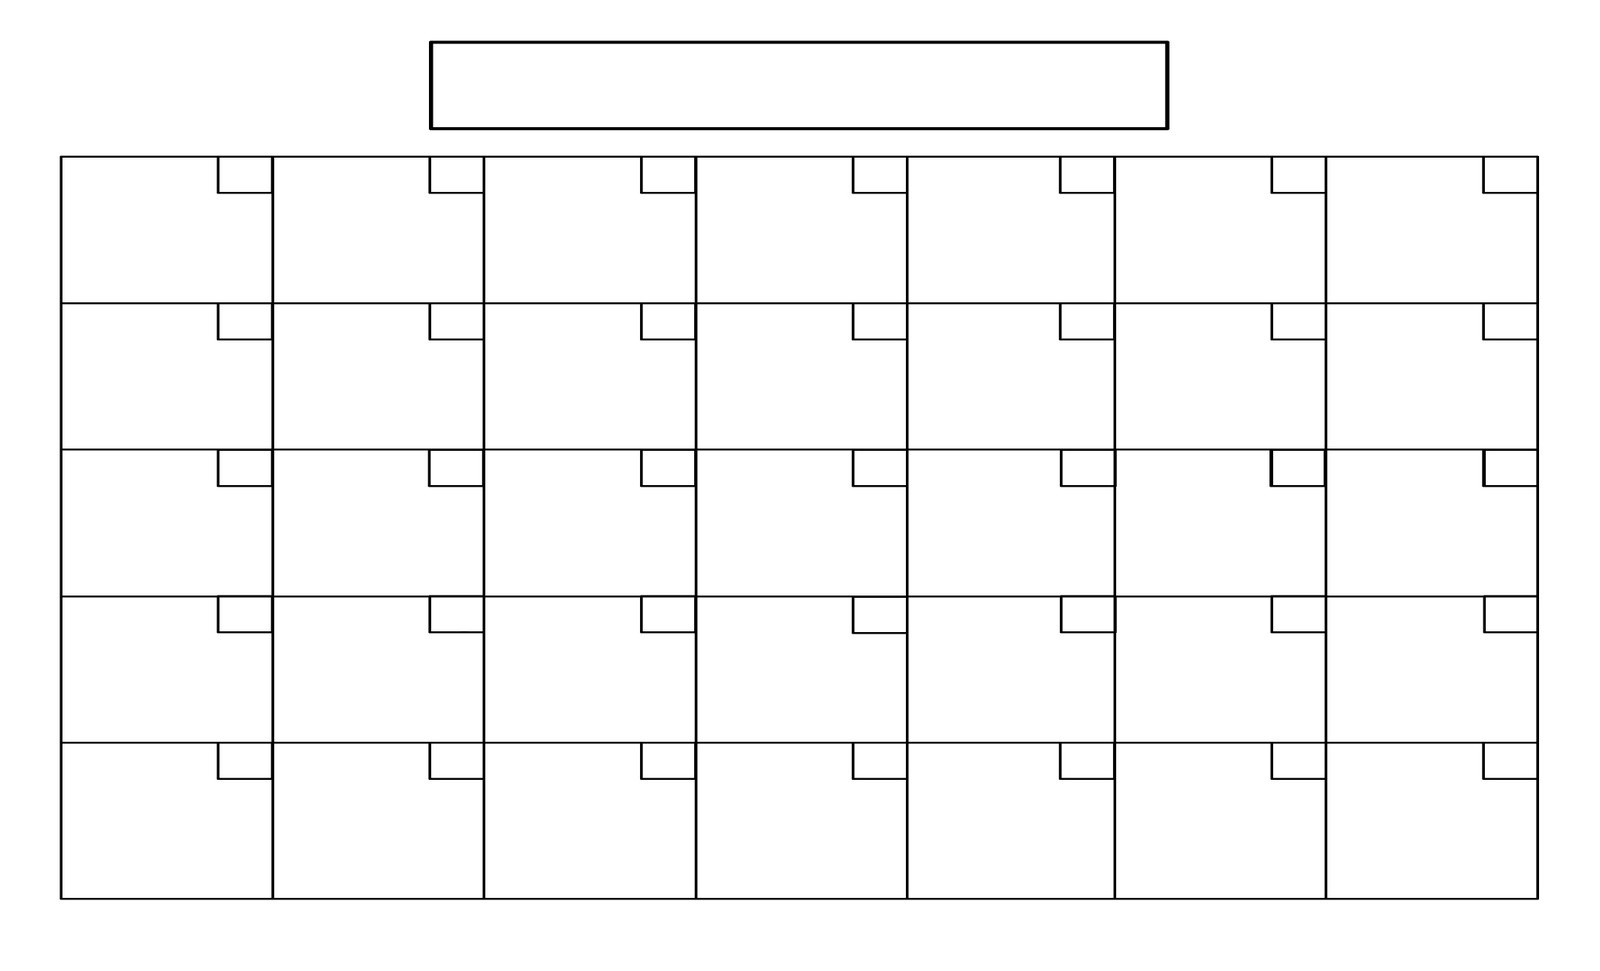 16 Simple Blank Calendar Template Images - Full Size Blank-Blank Calendar Grid Printable